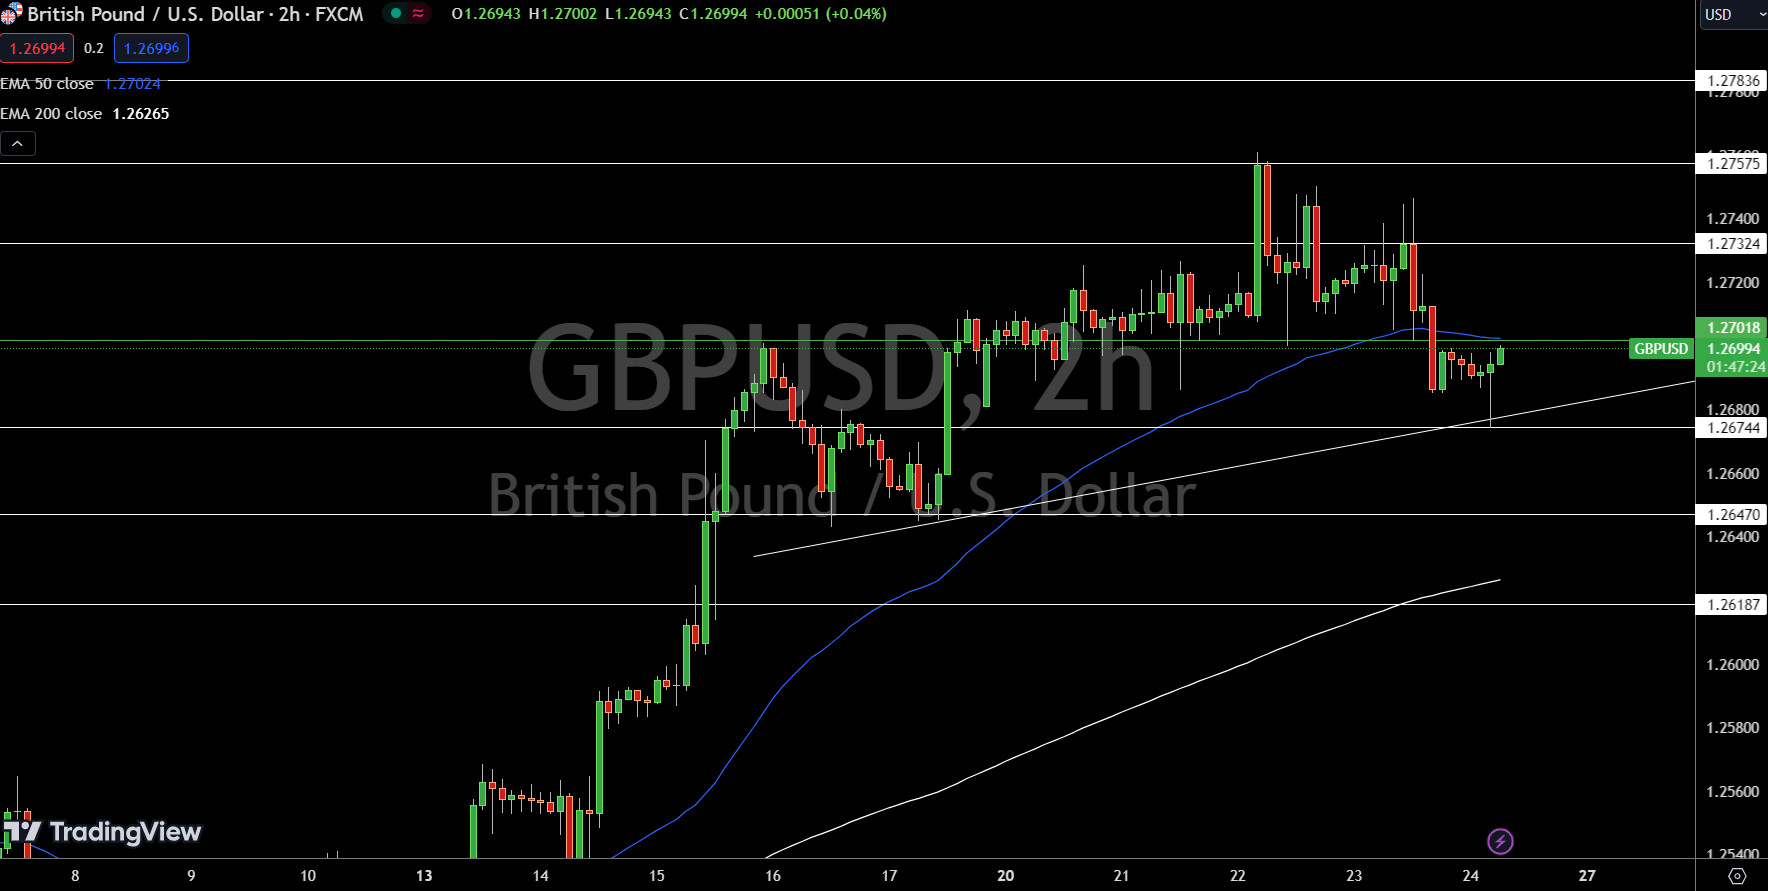 GBP/USD Price Chart - Source: TradingView